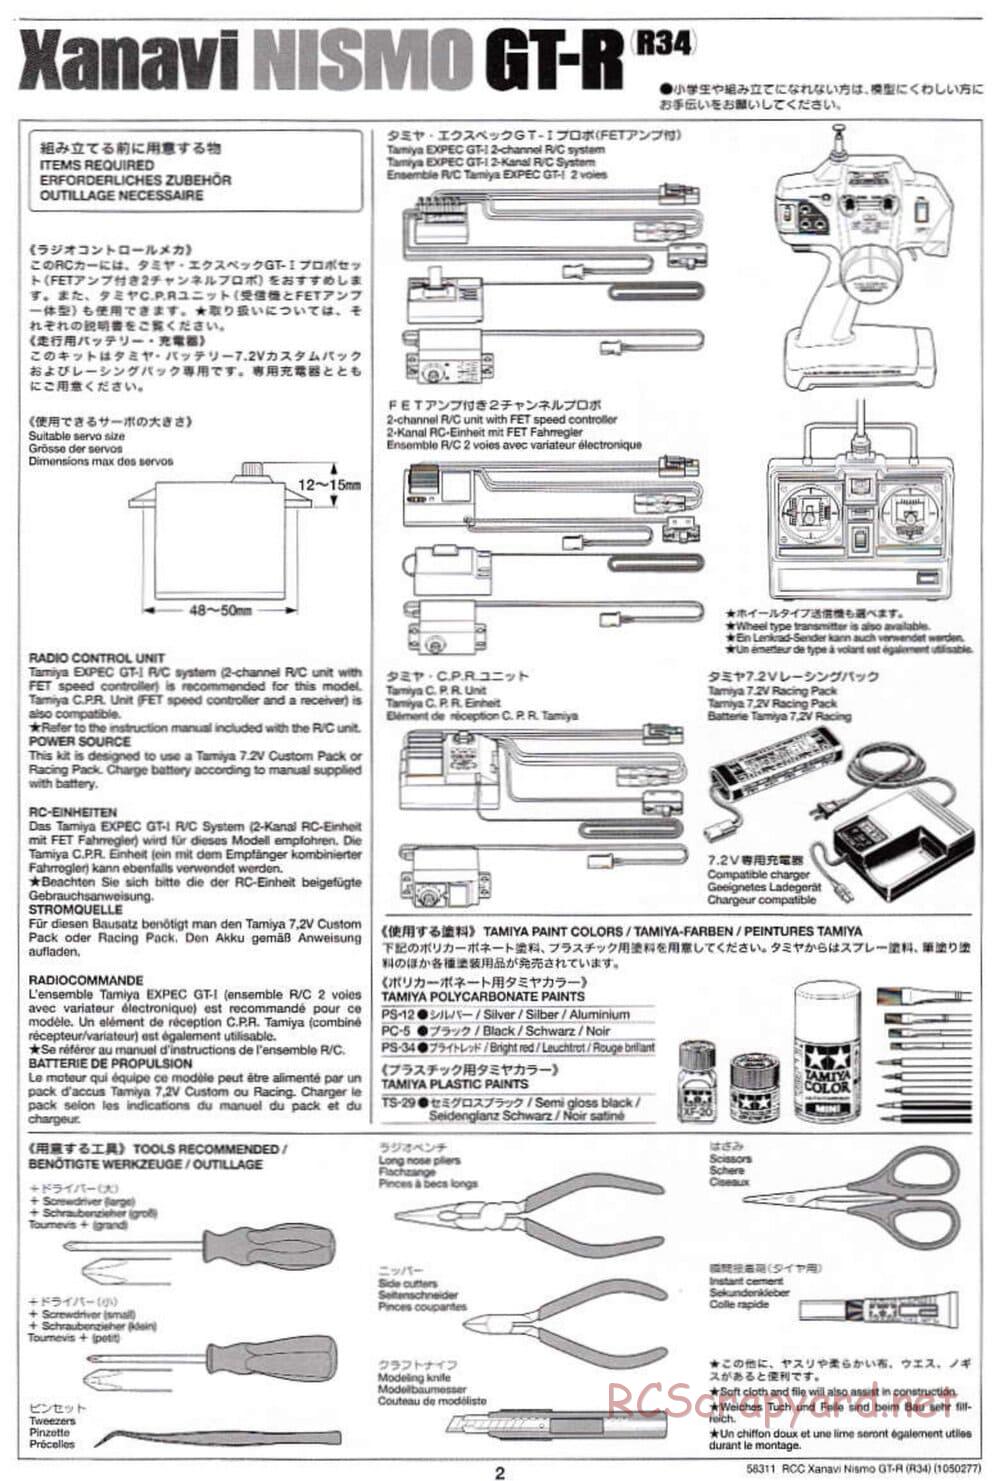 Tamiya - Xanavi Nismo GT-R (R34) - TB-02 Chassis - Manual - Page 2